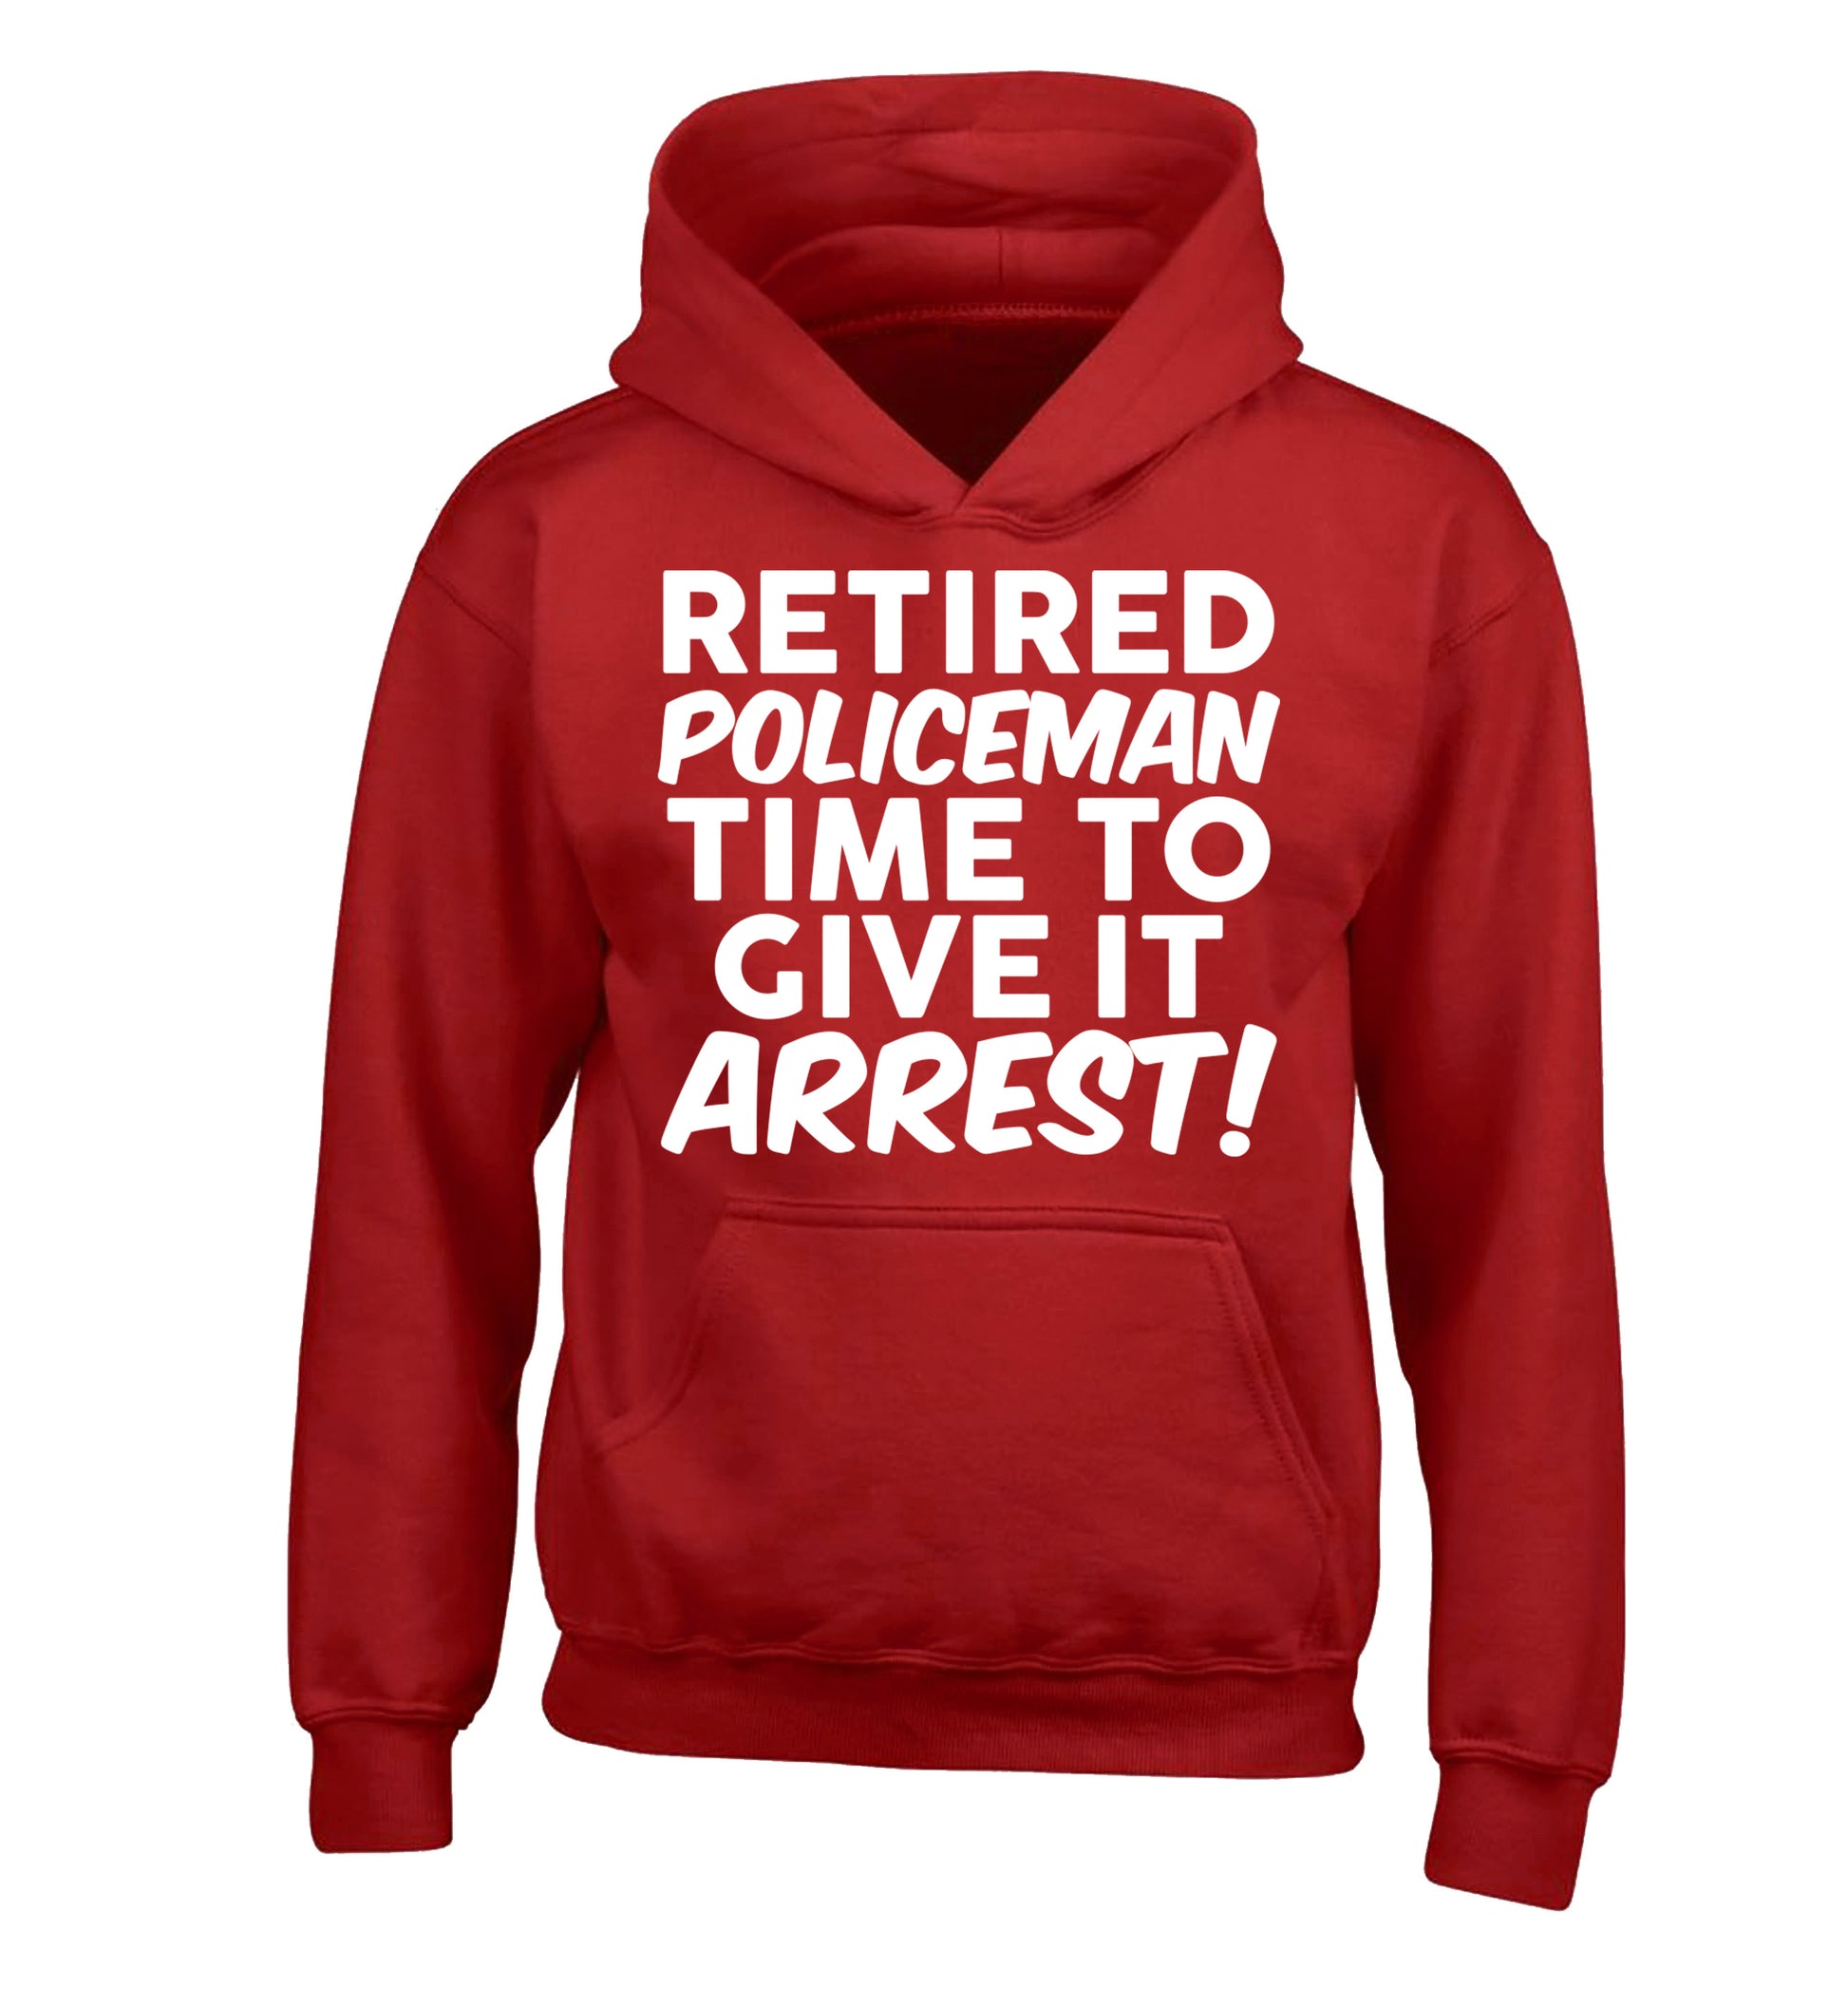 Retired policeman give it arresst! children's red hoodie 12-13 Years